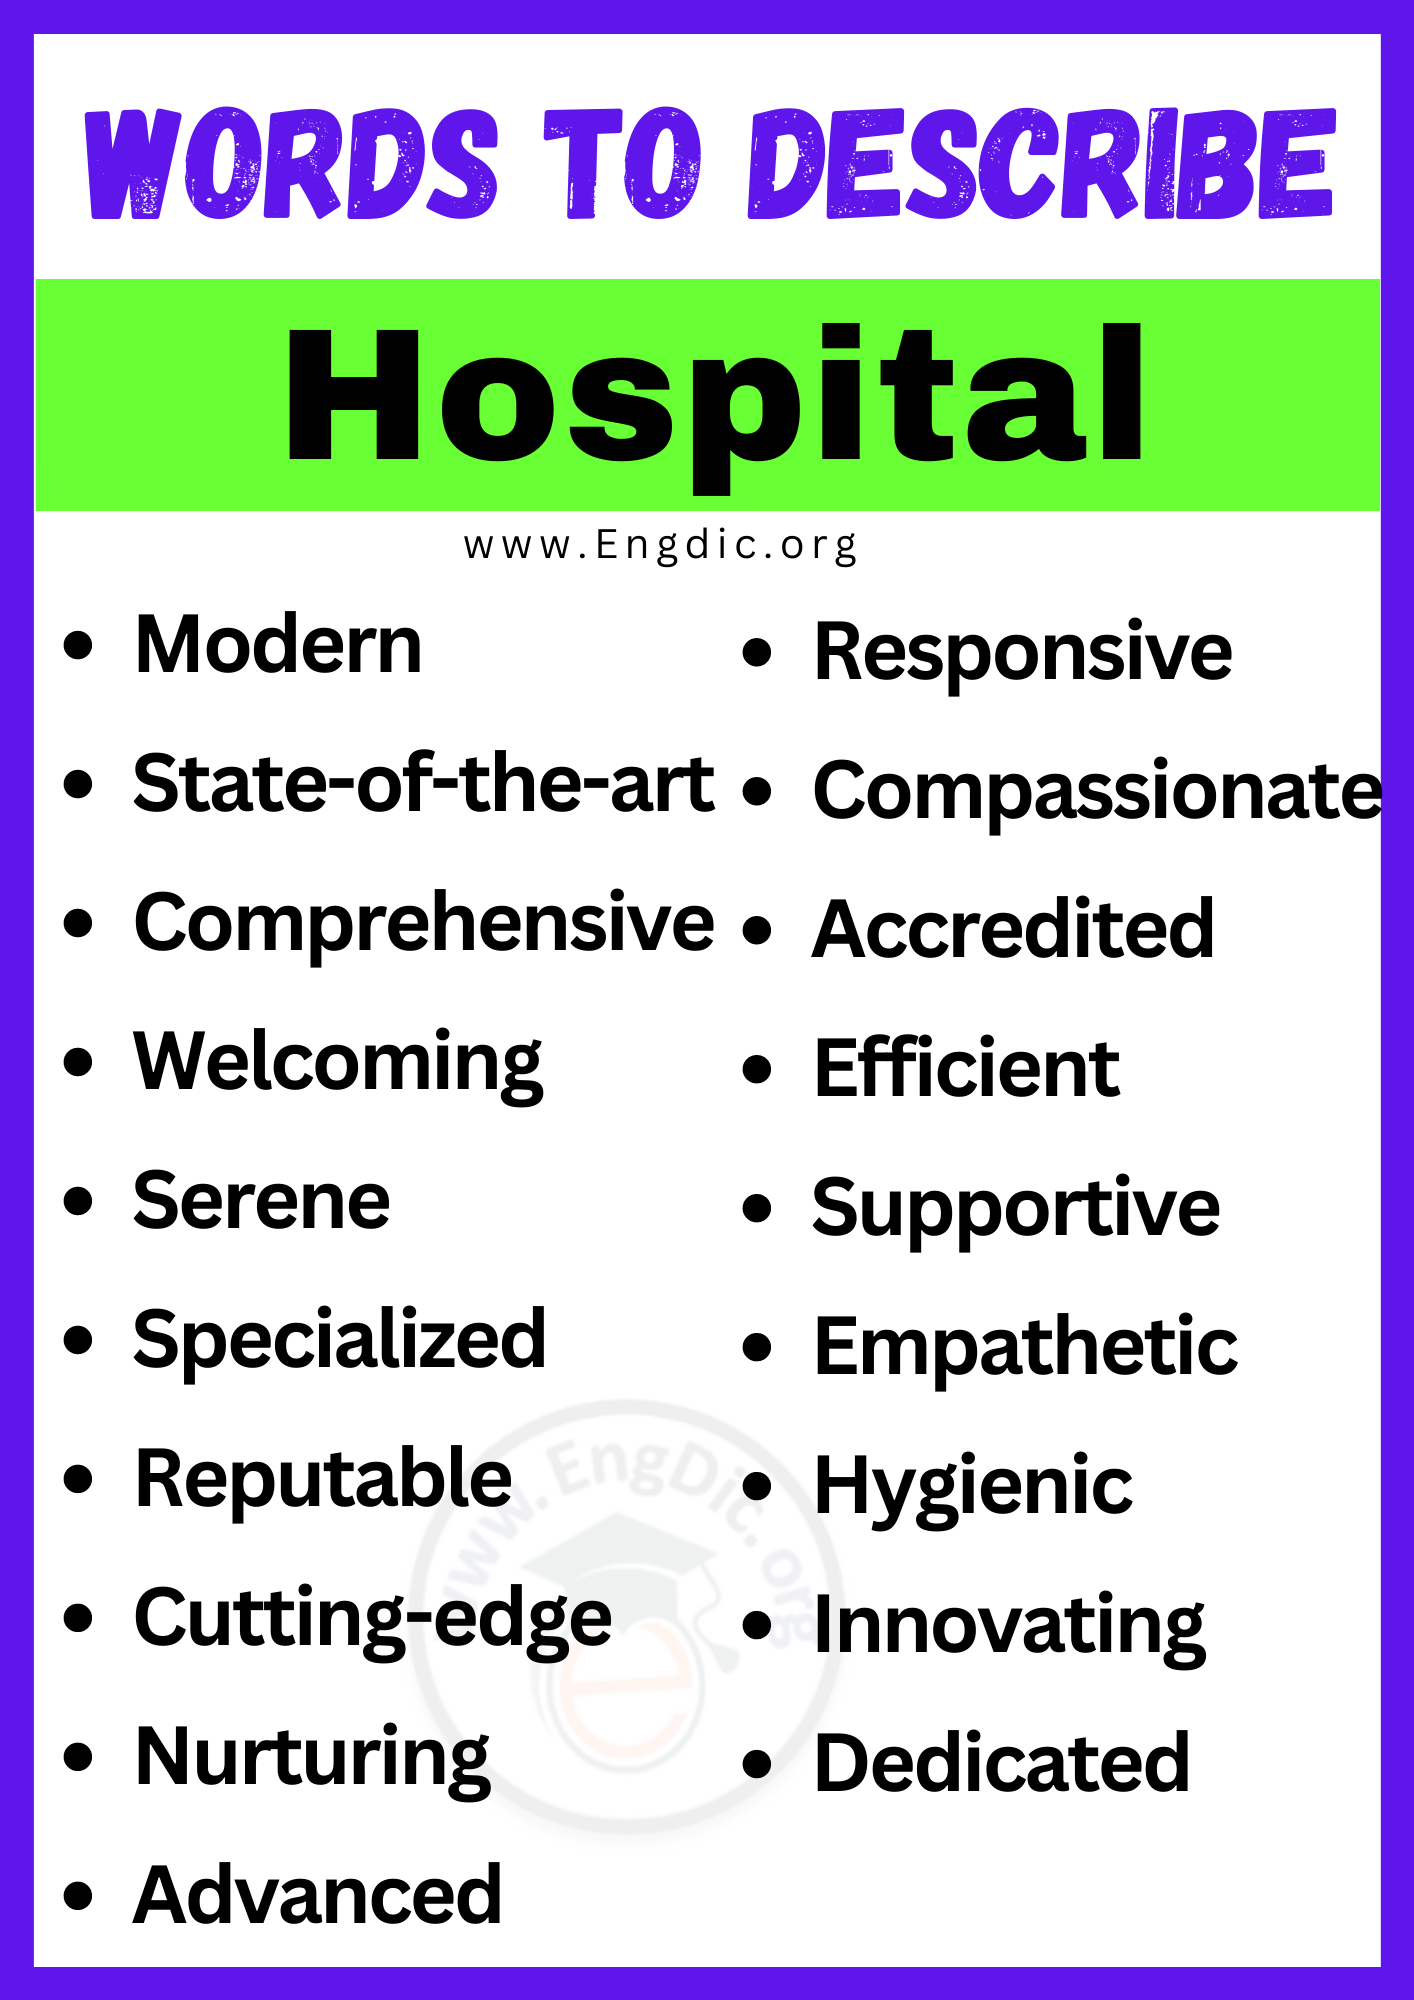 Words to Describe Hospital